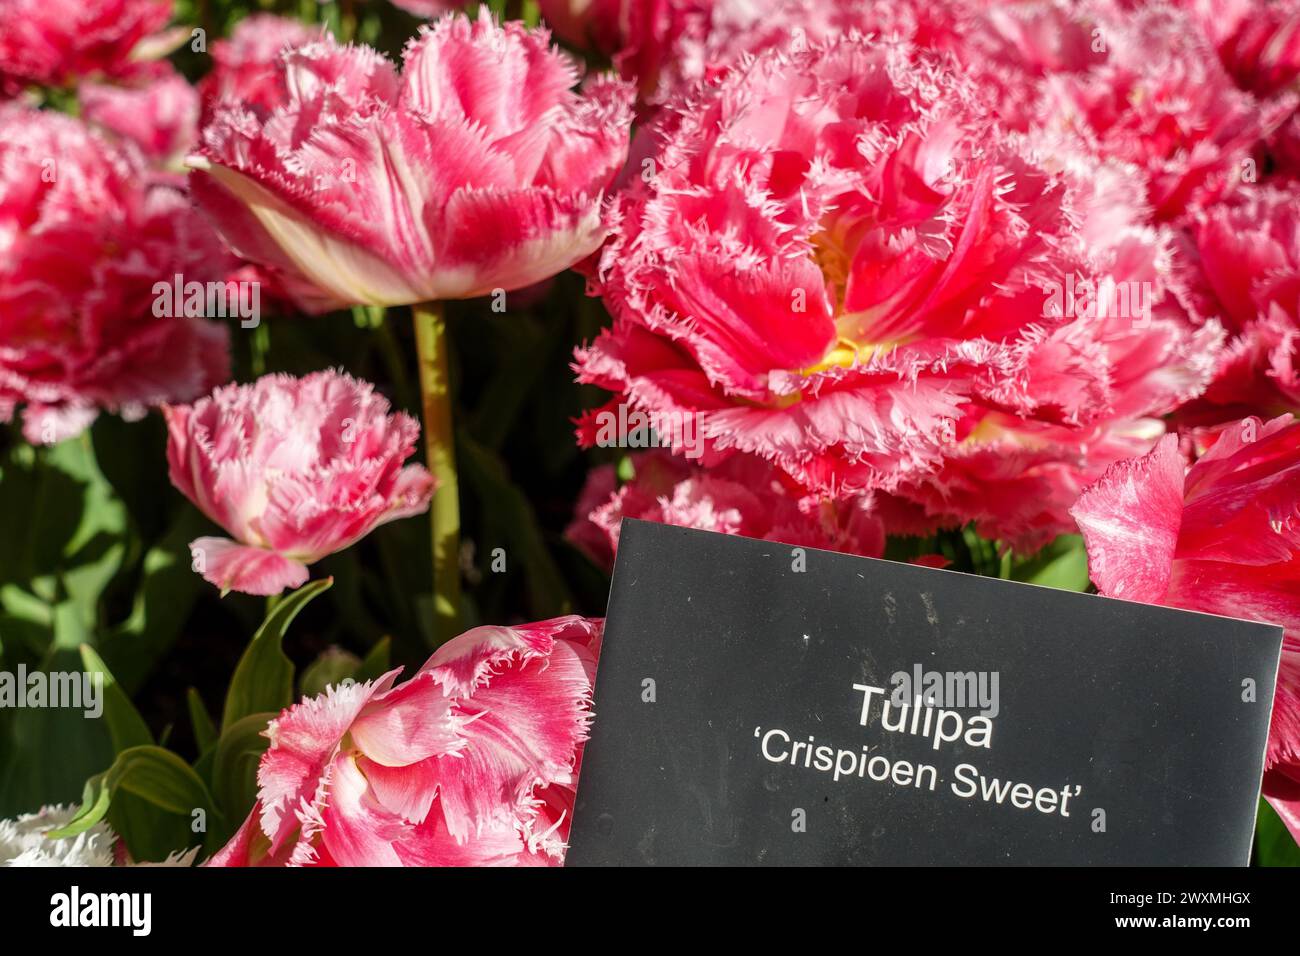 Crispioen Sweet tulipa, rugged tulip variety in the Keukenhof tulip garden, Netherlands, with name tag Stock Photo